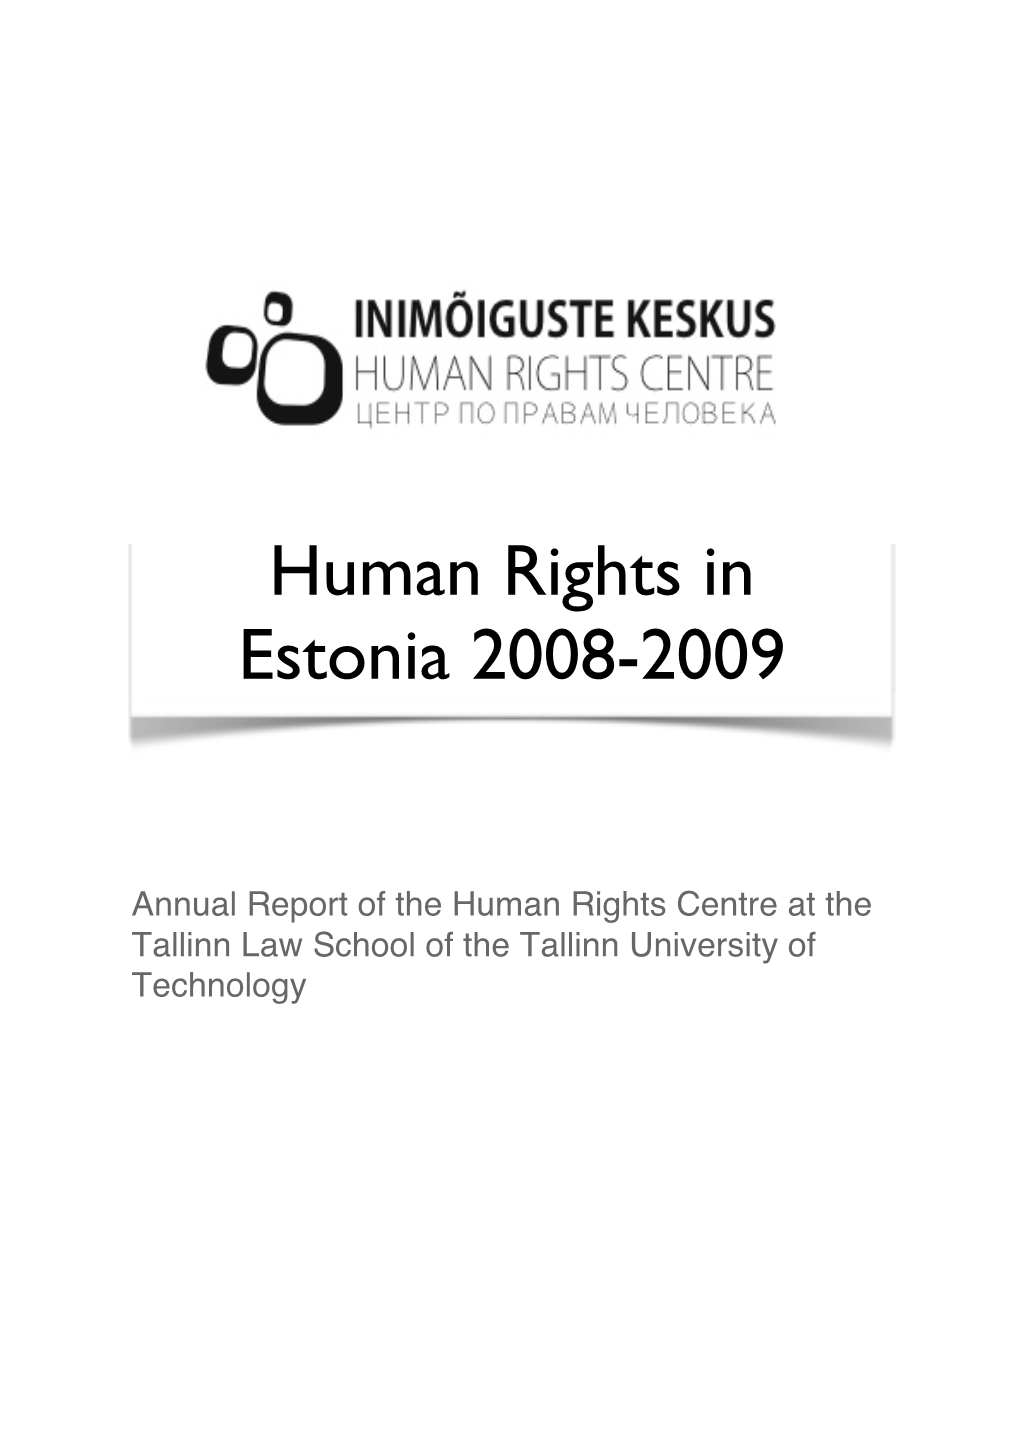 Human Rights in Estonia 2008-2009